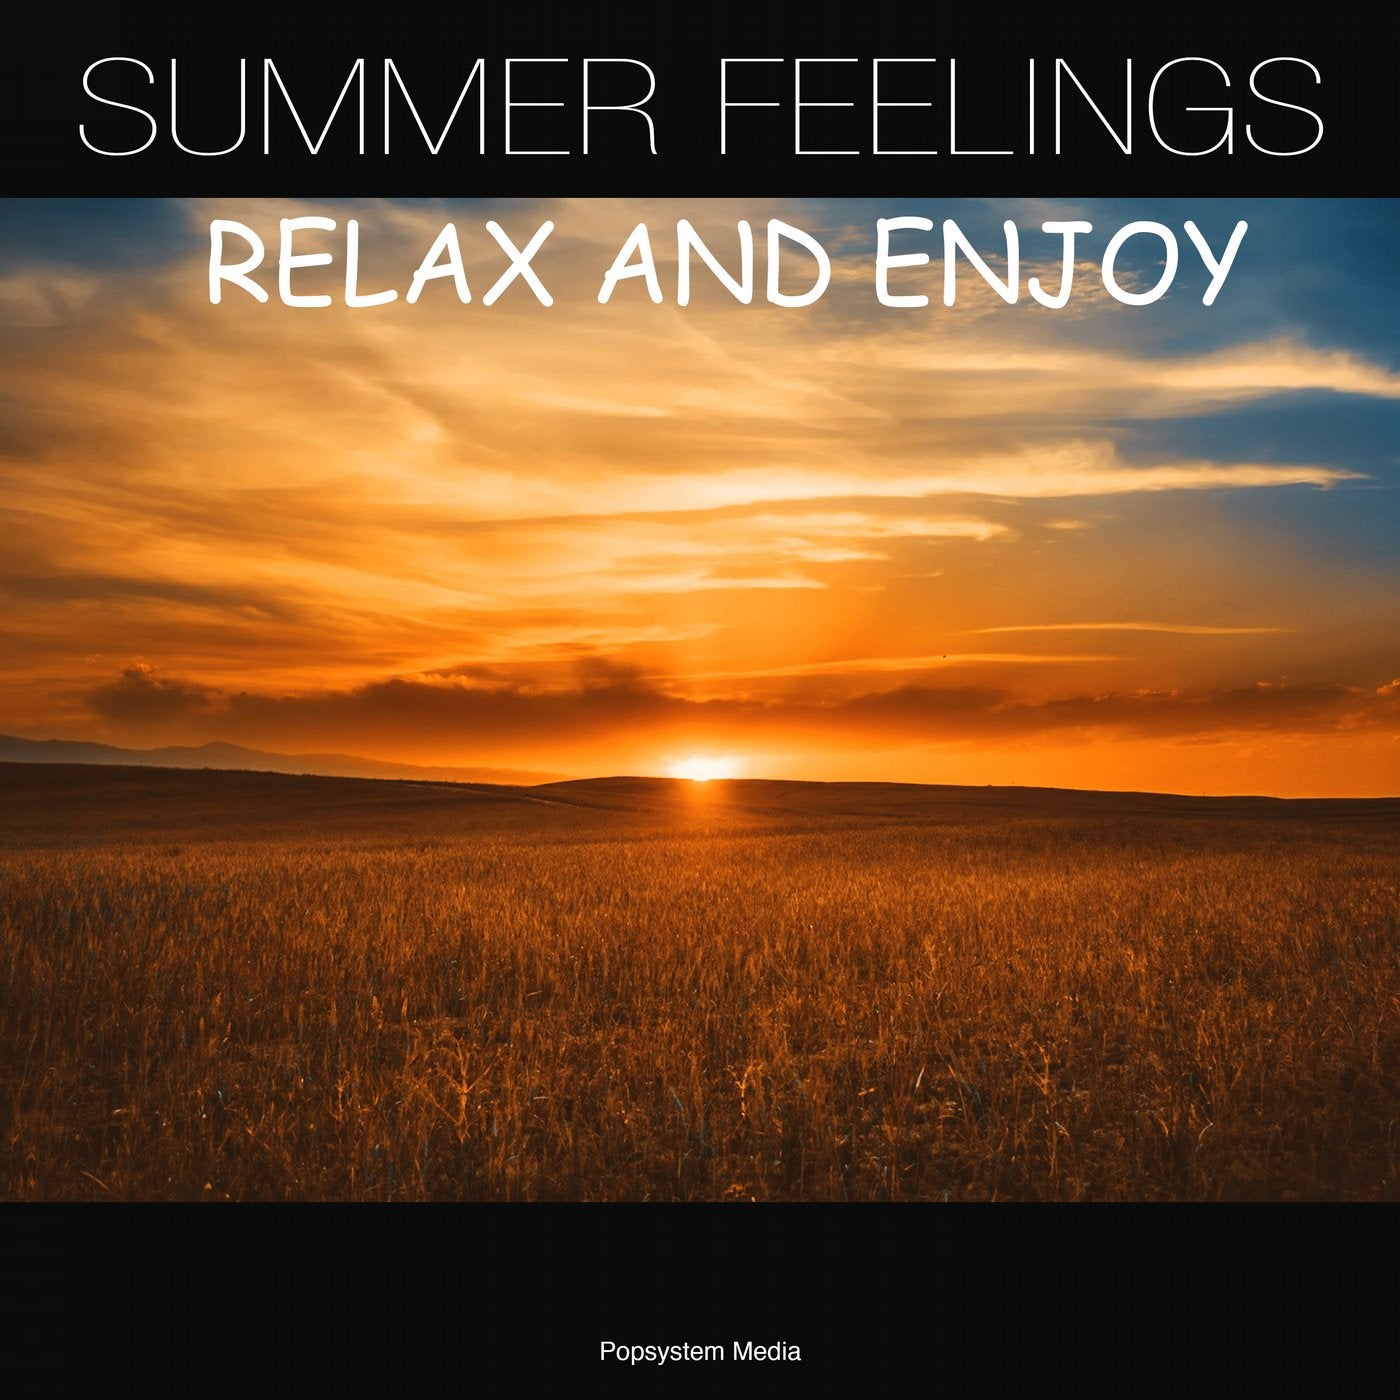 Summer Feelings Relax and Enjoy